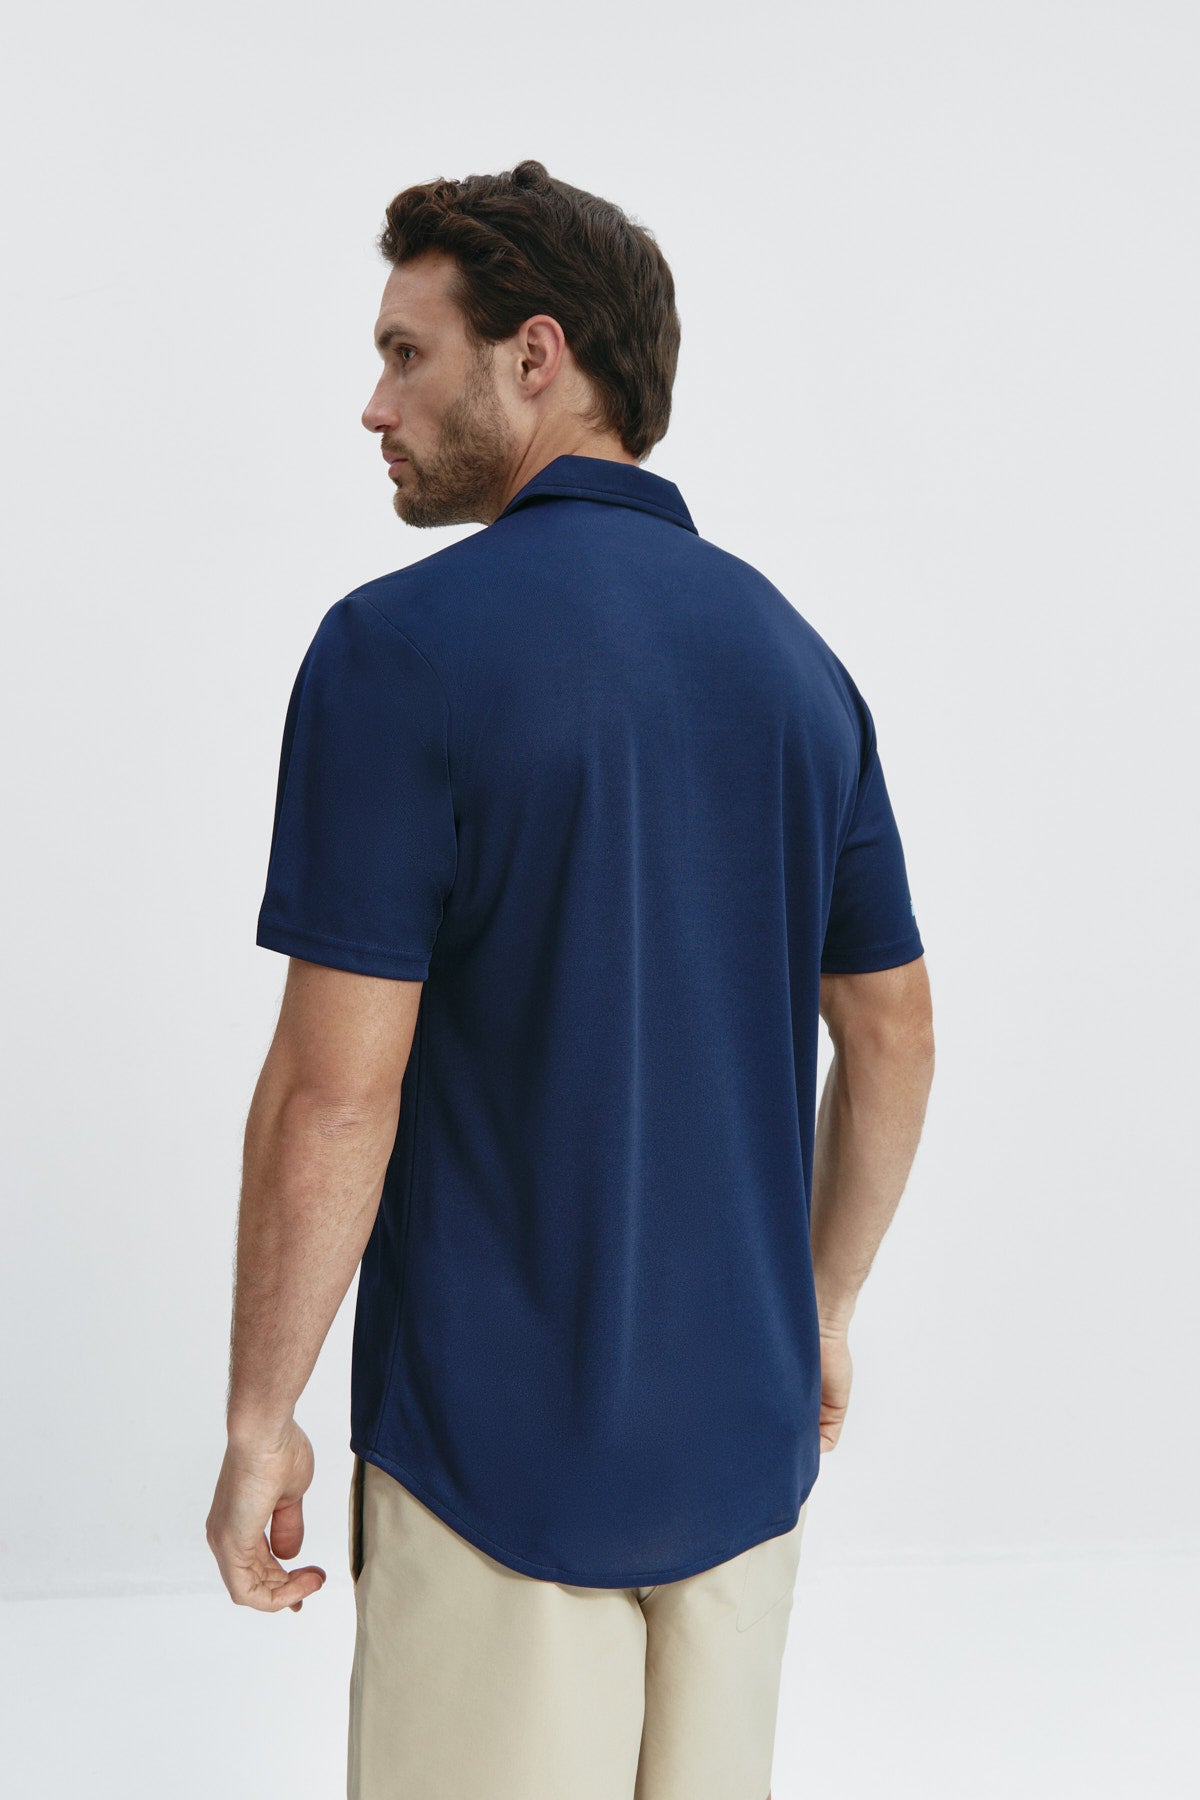 ICE short sleeve sapphire blue polo shirt